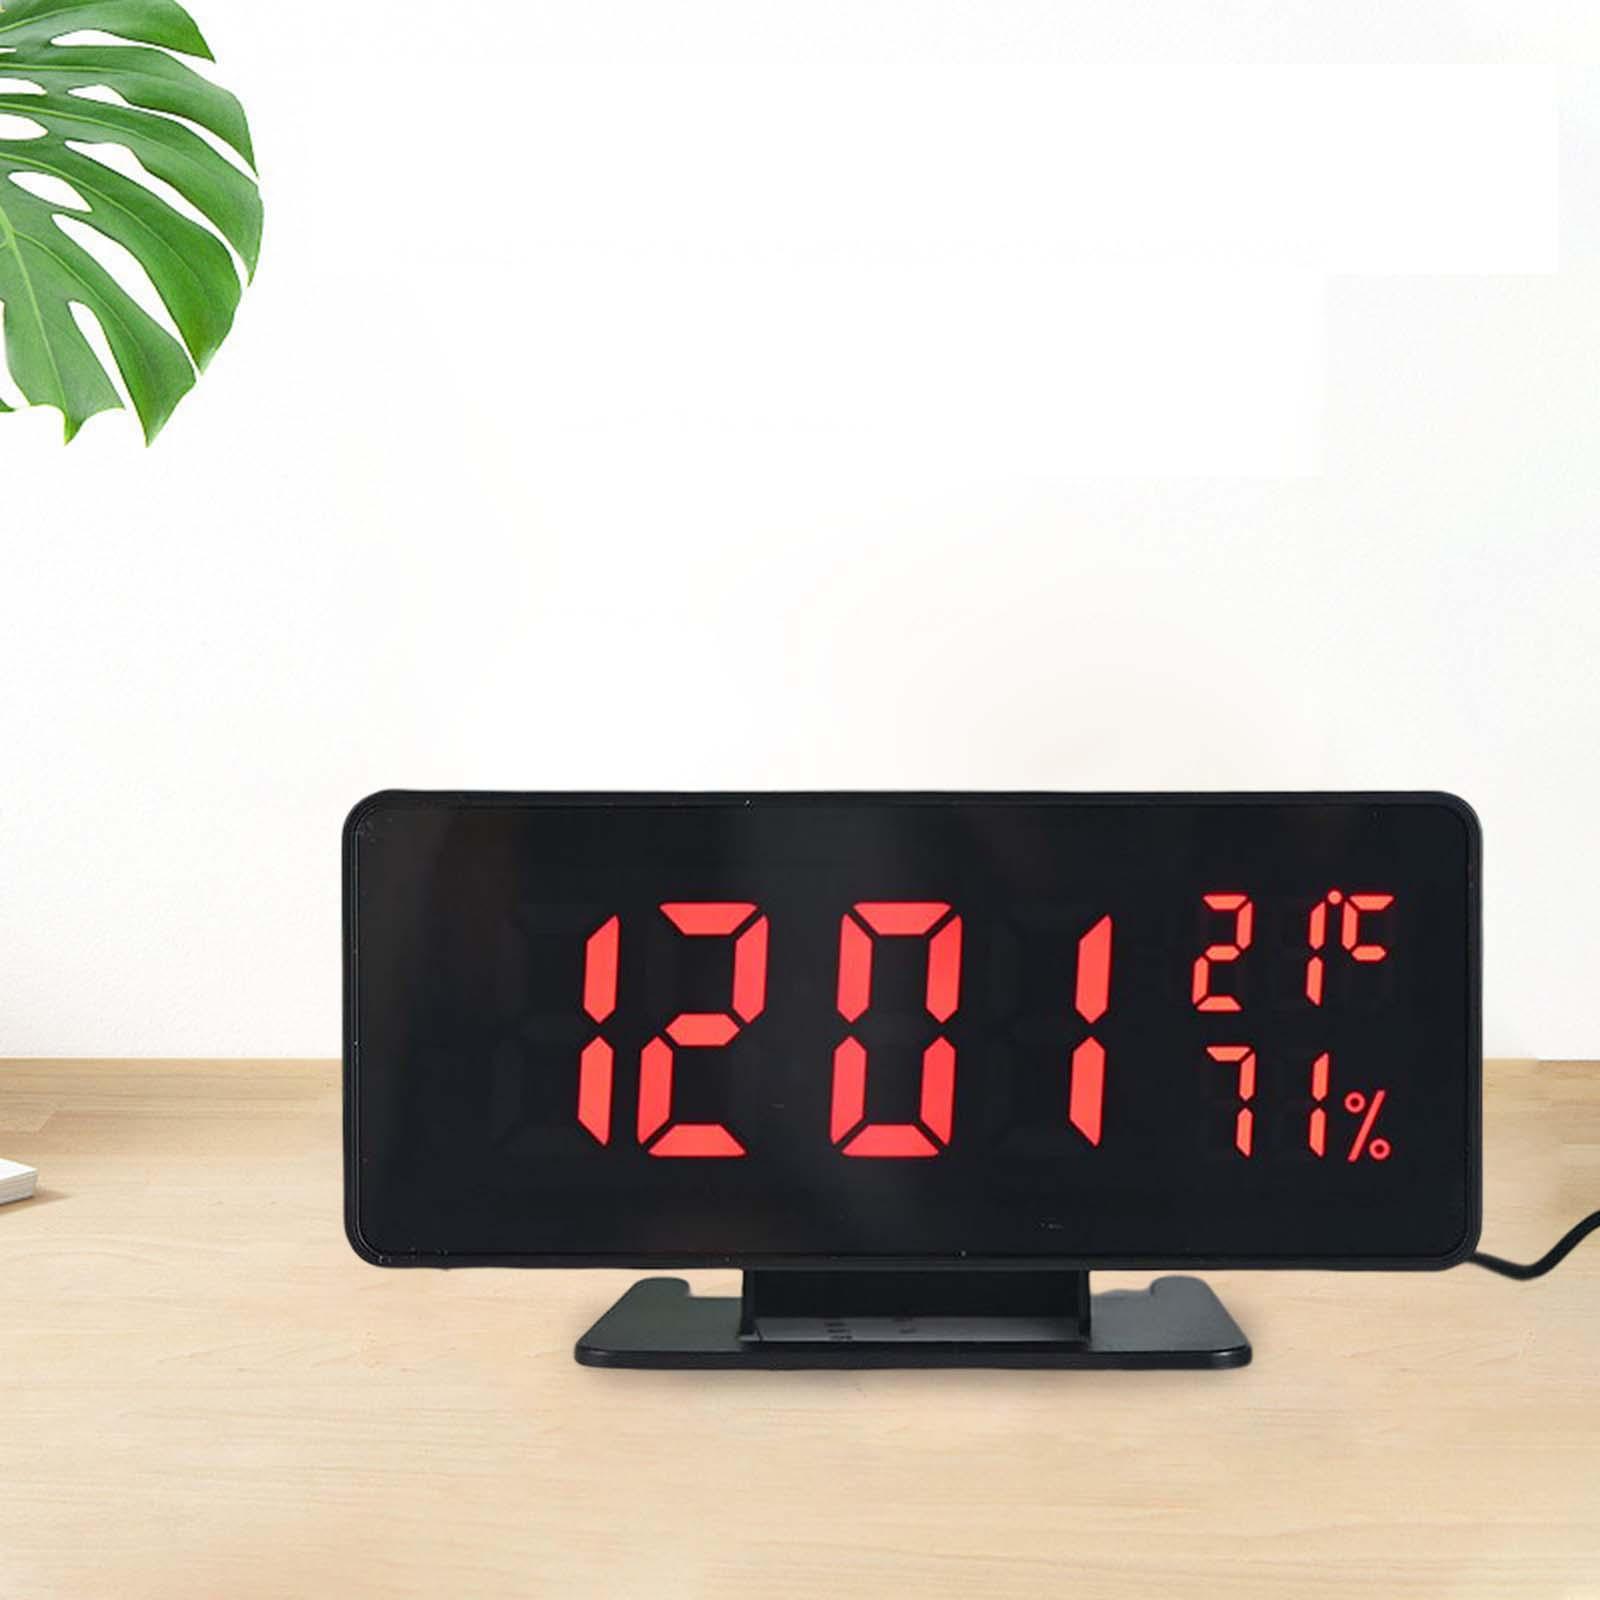 USB Digital Alarm Clock Date Display Bedroom Home Decor Decorative LED Red